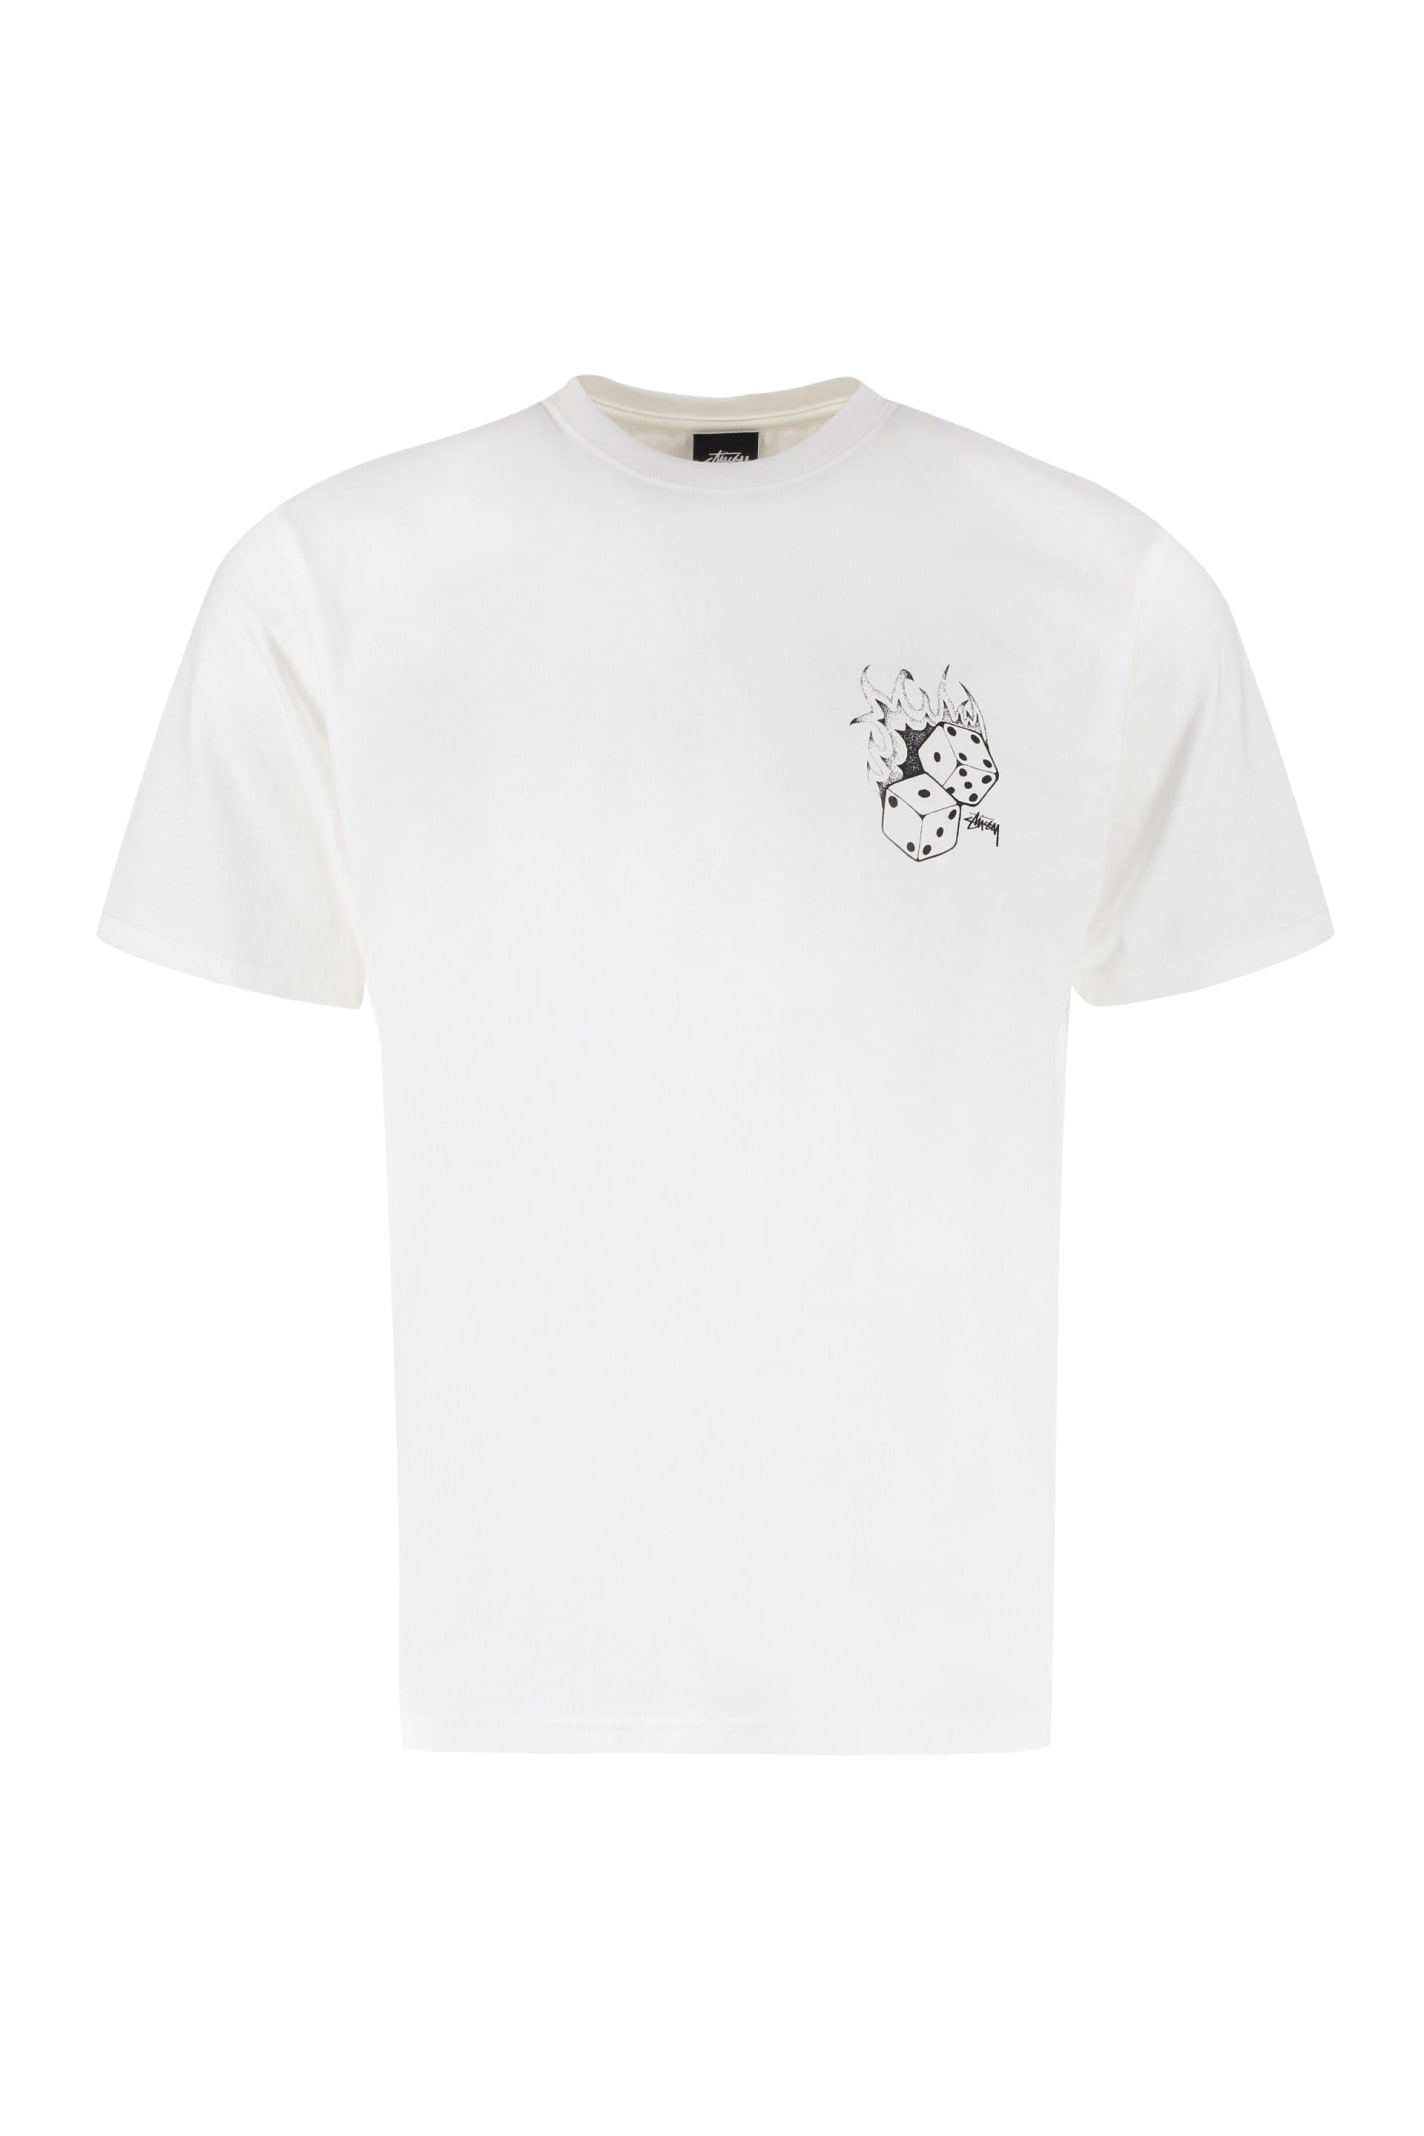 Stussy Fire Dice Cotton T-shirt